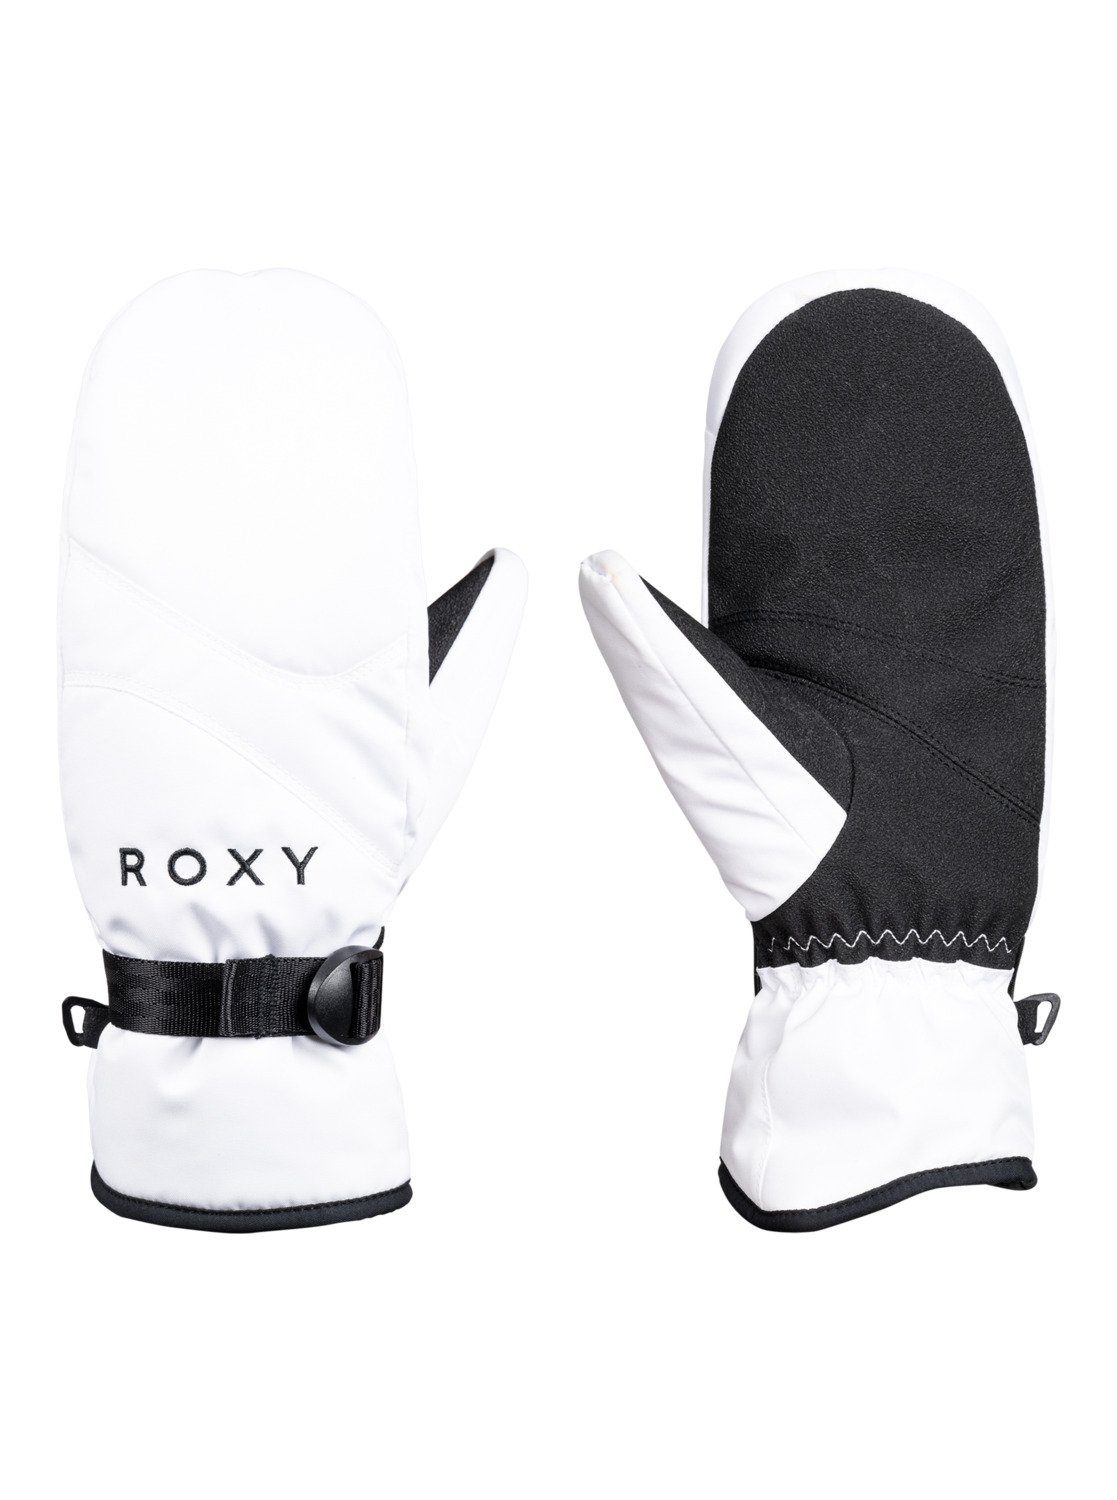 Roxy Bright ROXY White Jetty Snowboardhandschuhe